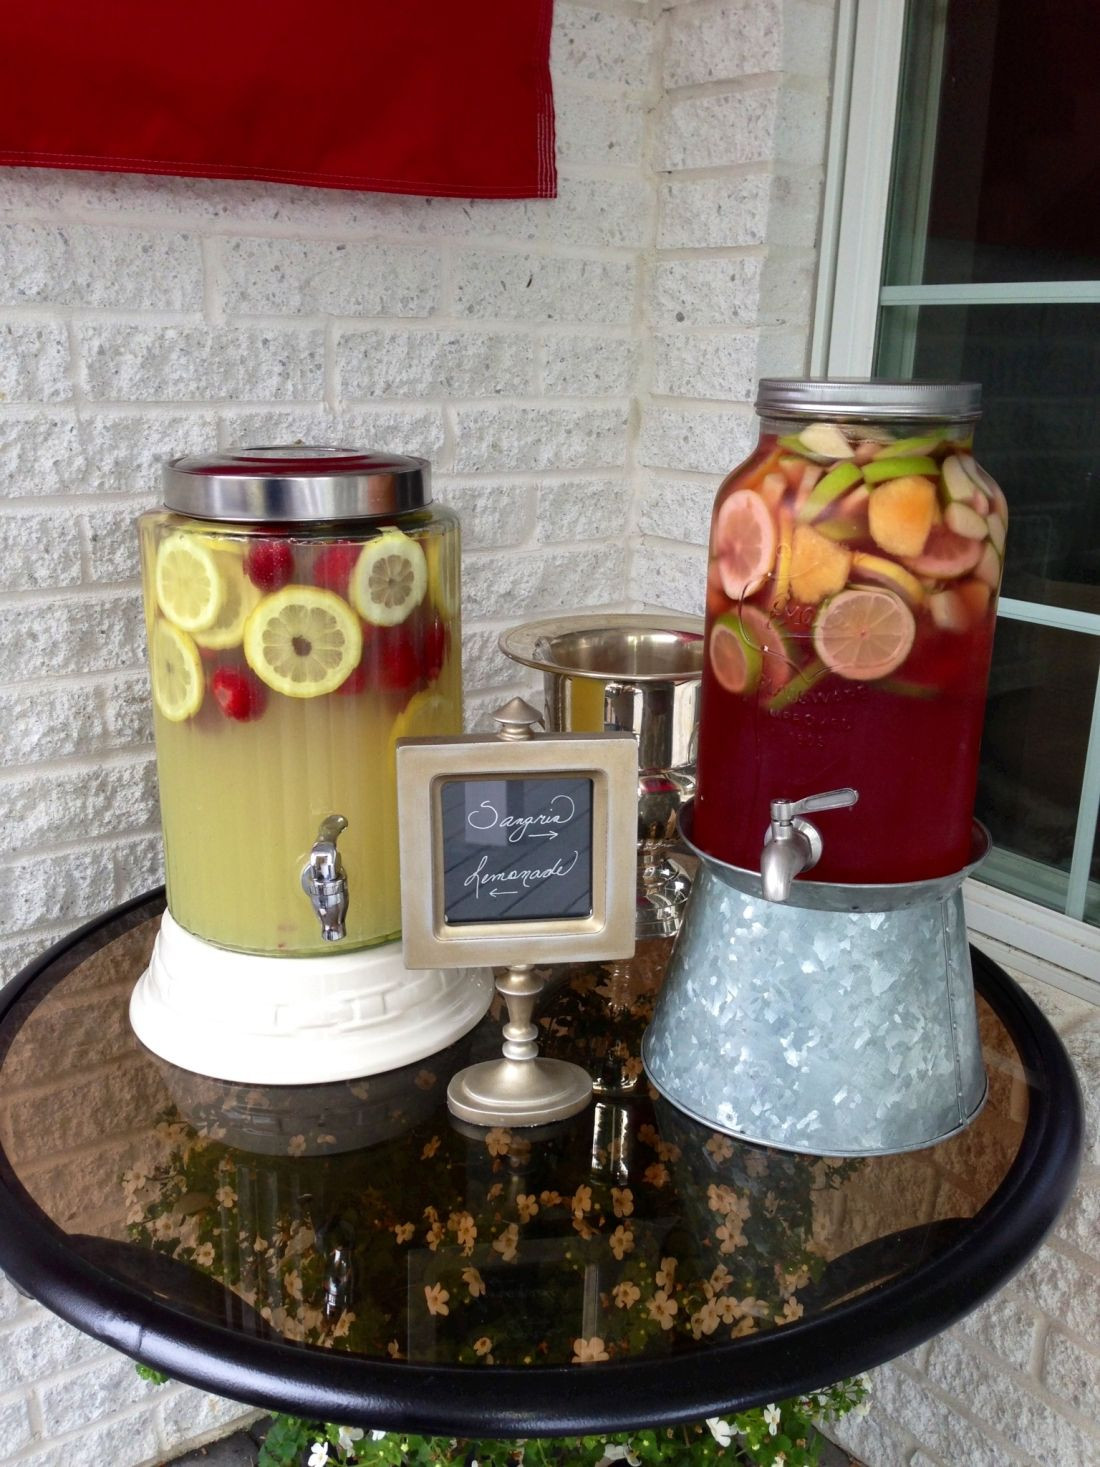 Backyard Graduation Party Food Ideas
 Decor Graduation Decoration Ideas With Orange Drink As The